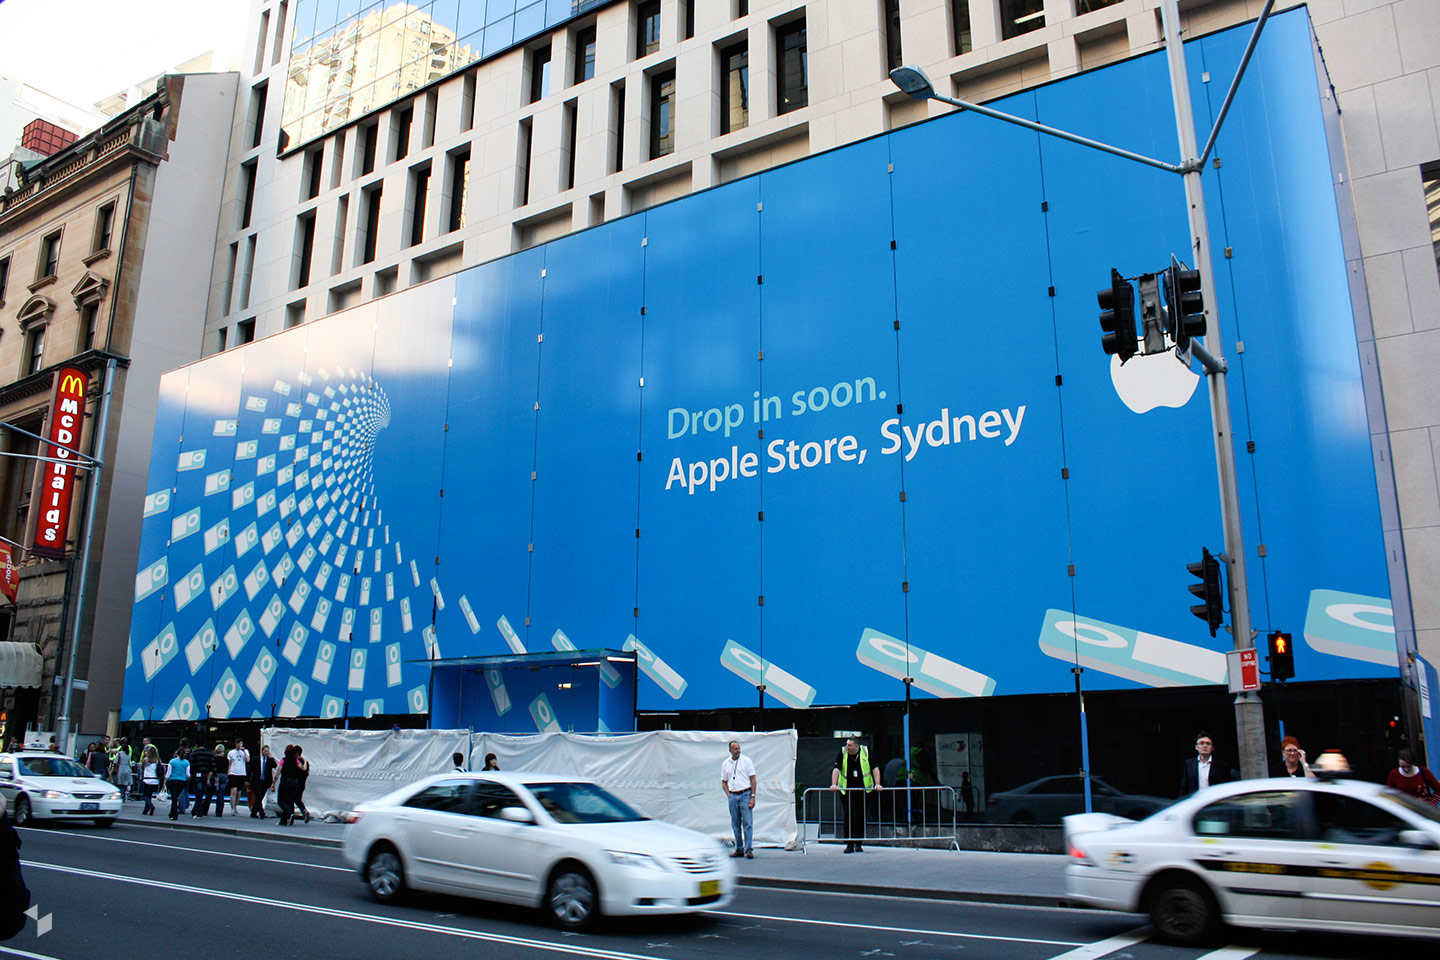 Apple Sydney in Sydney (Australien) eröffnete am 19. Juni 2008